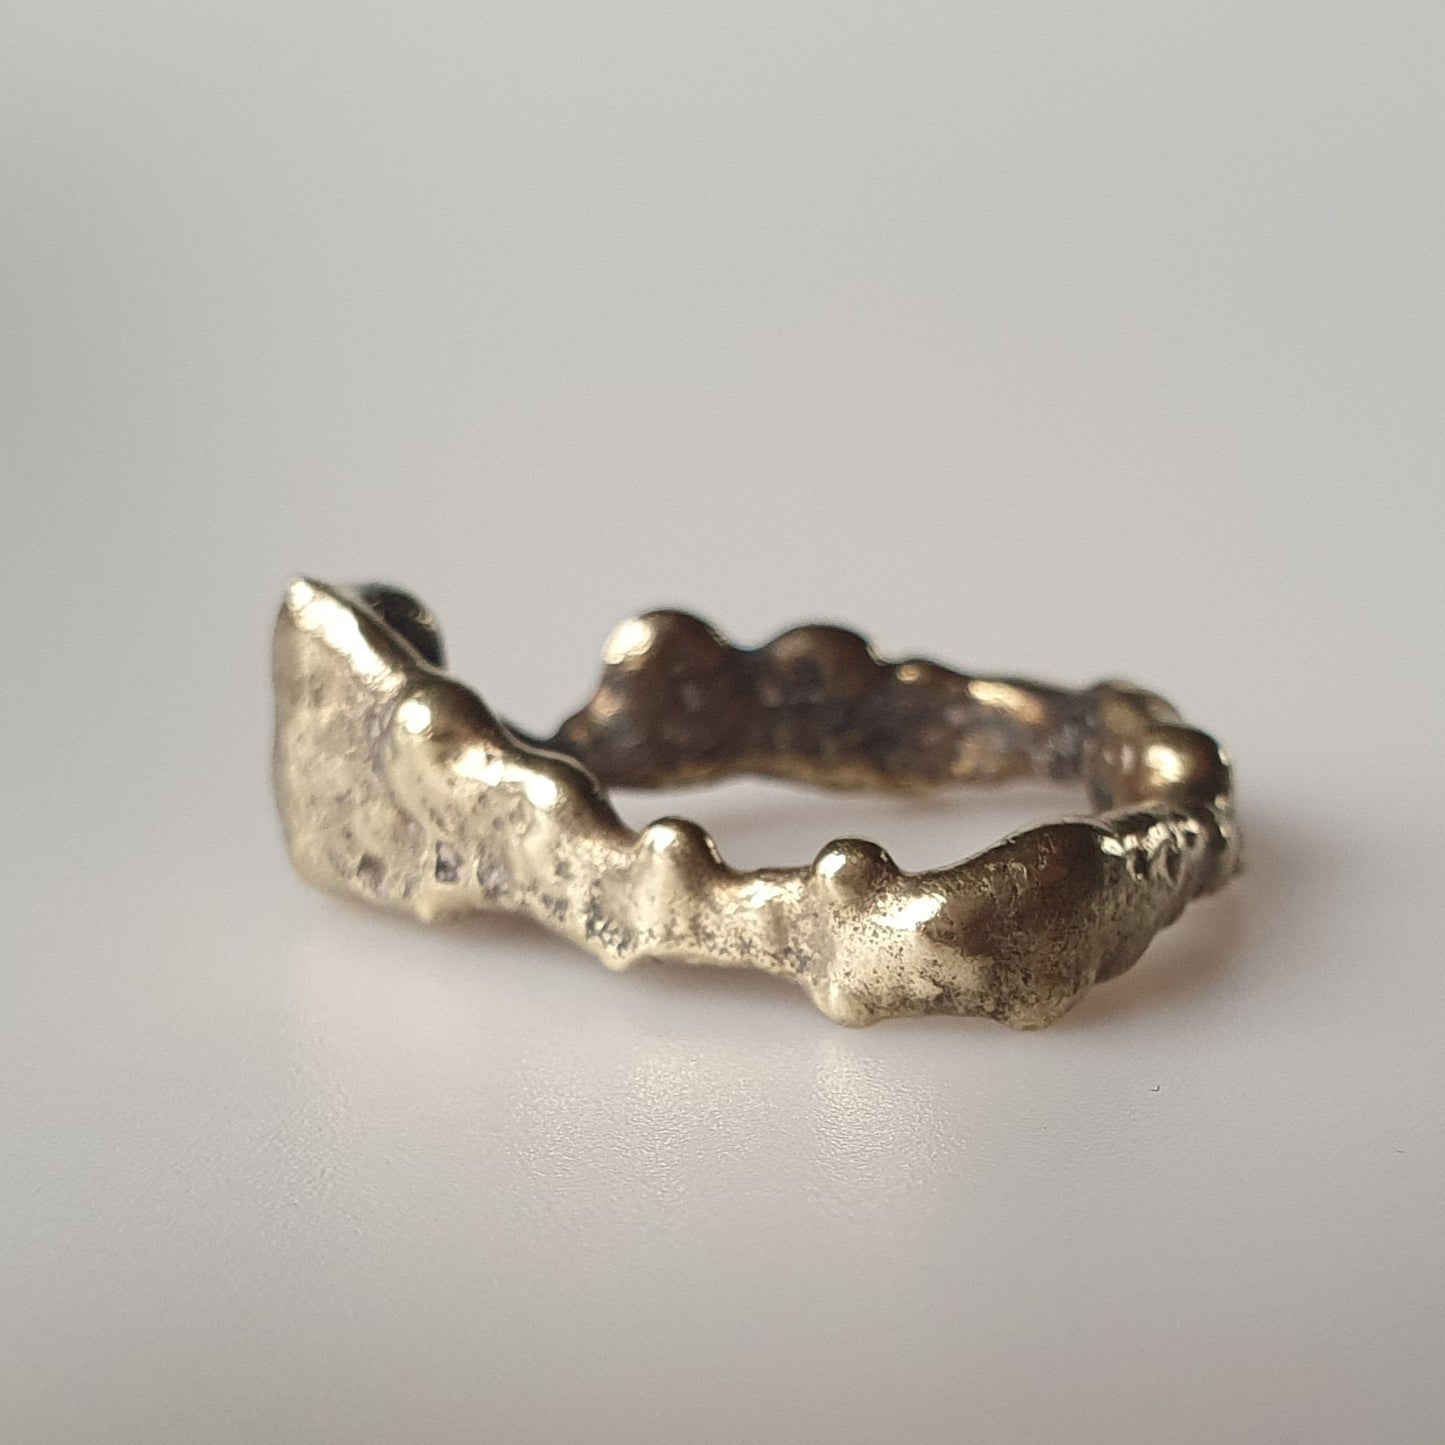 18 ct gold ring on silver,Ring, vintage, handmade, unique, statement, industrial historical, medieval, relics, sterling silver, stackable, brutalist,designer, unusual